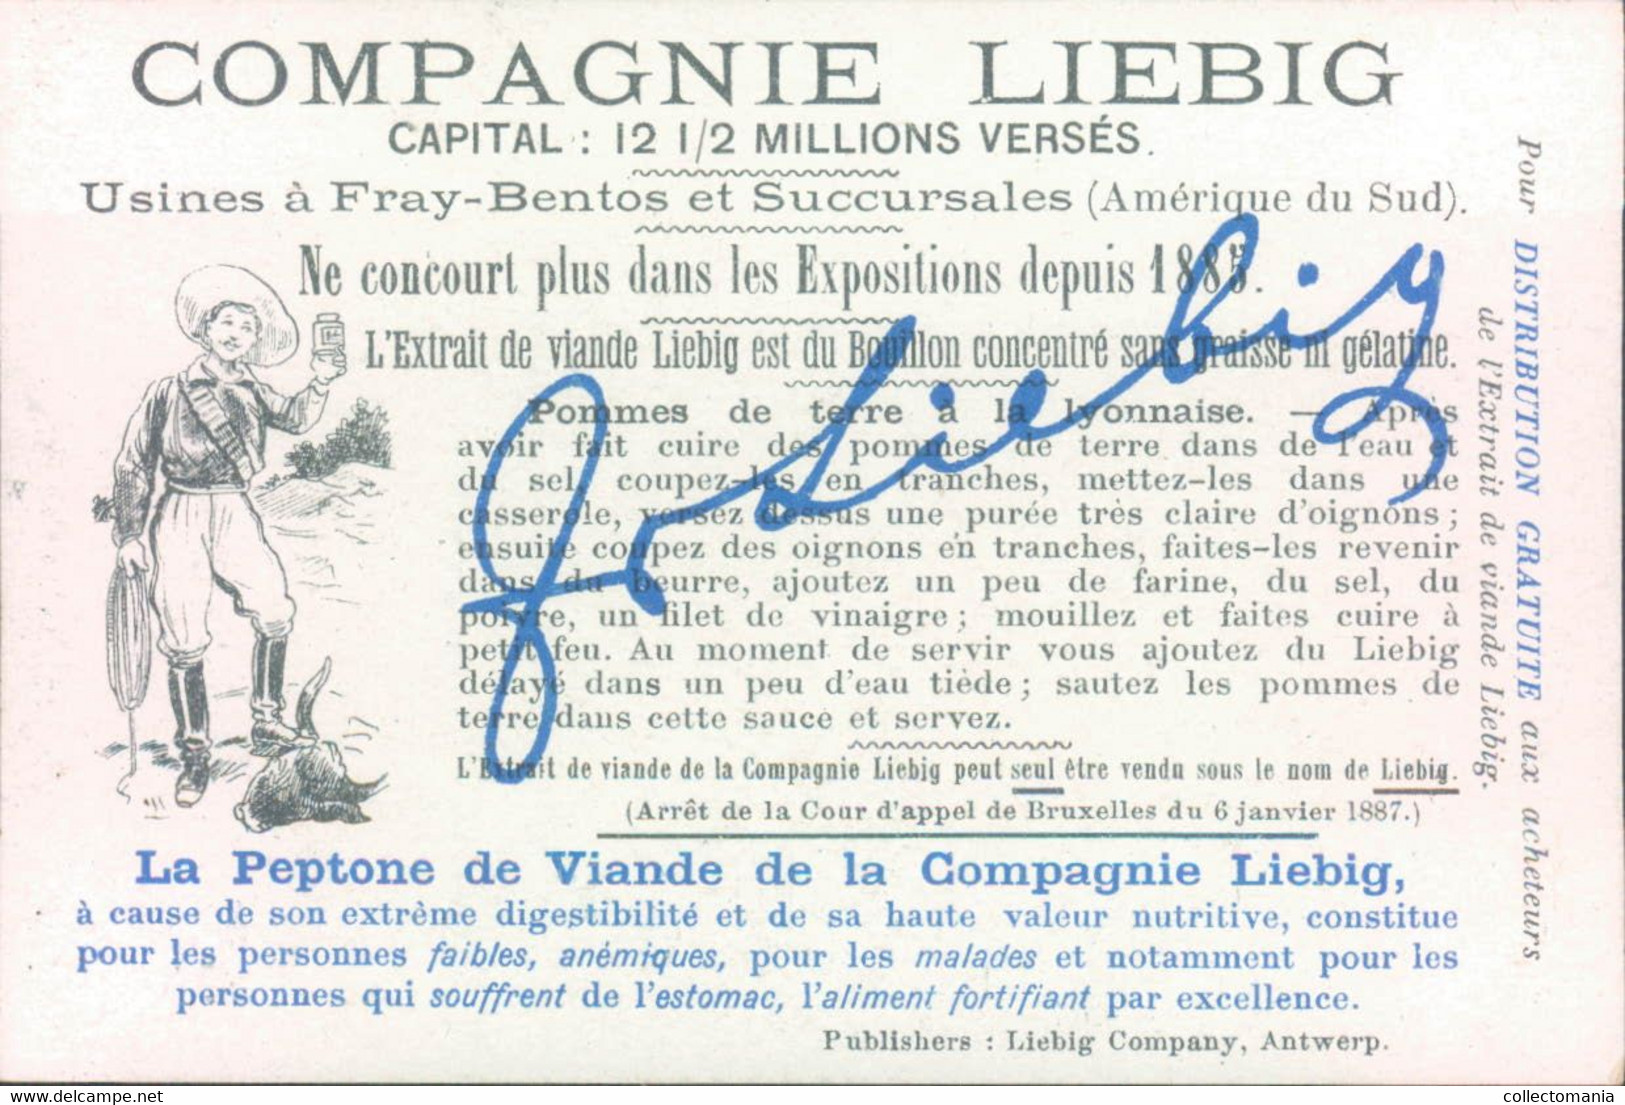 0624 Exposition universelle Paris 1900 - Liebig complete  6 card set VG chromo litho cards